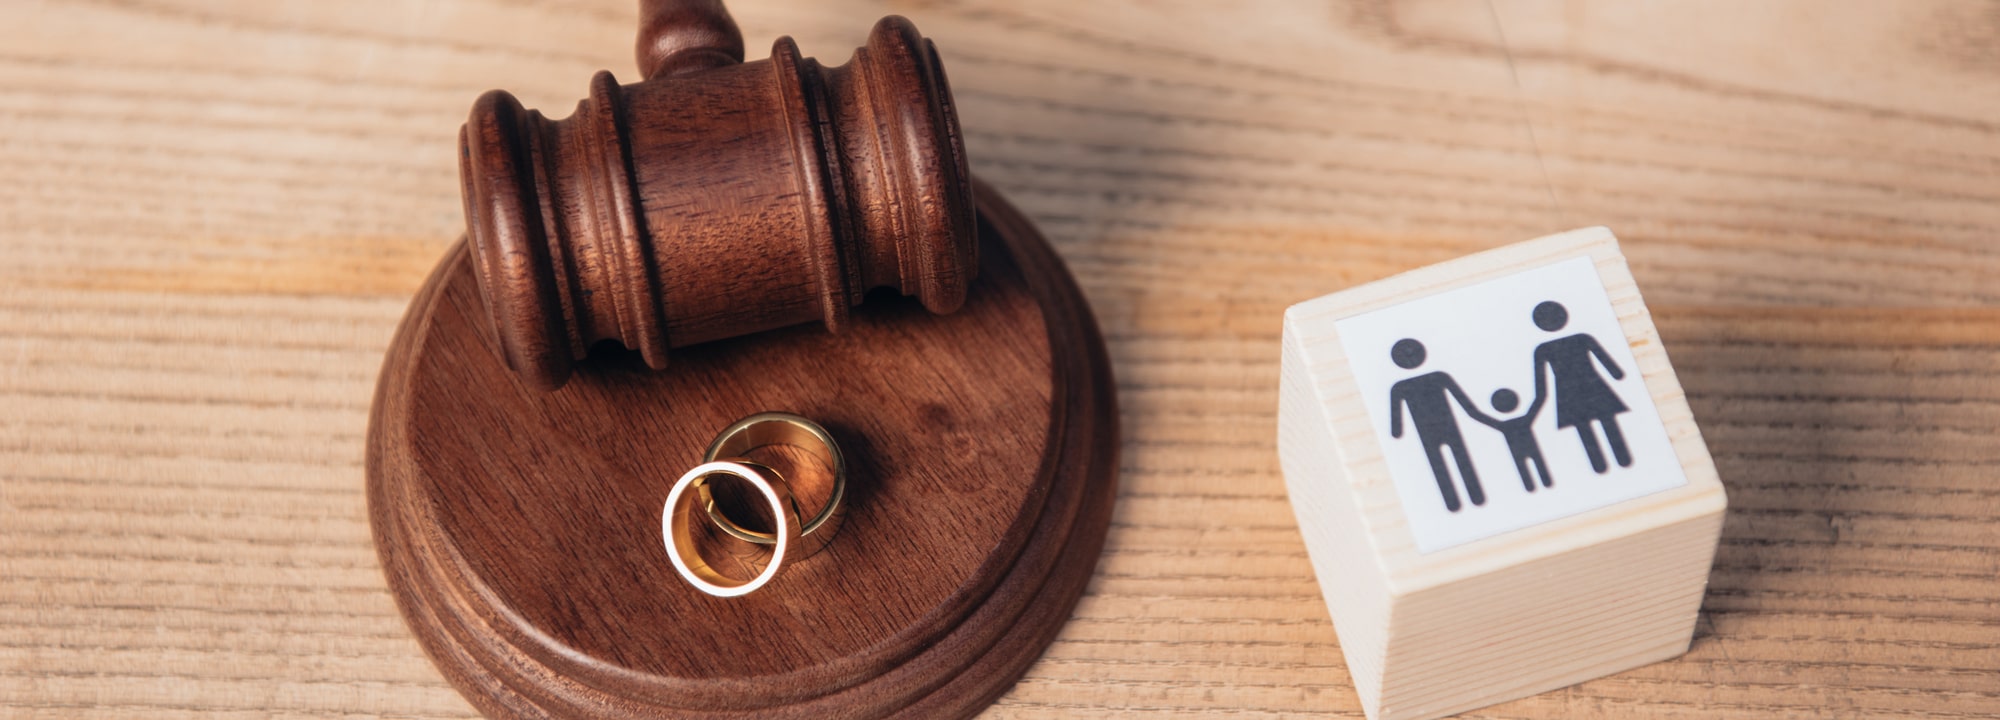 Divorce Lawyer Tampa, FL